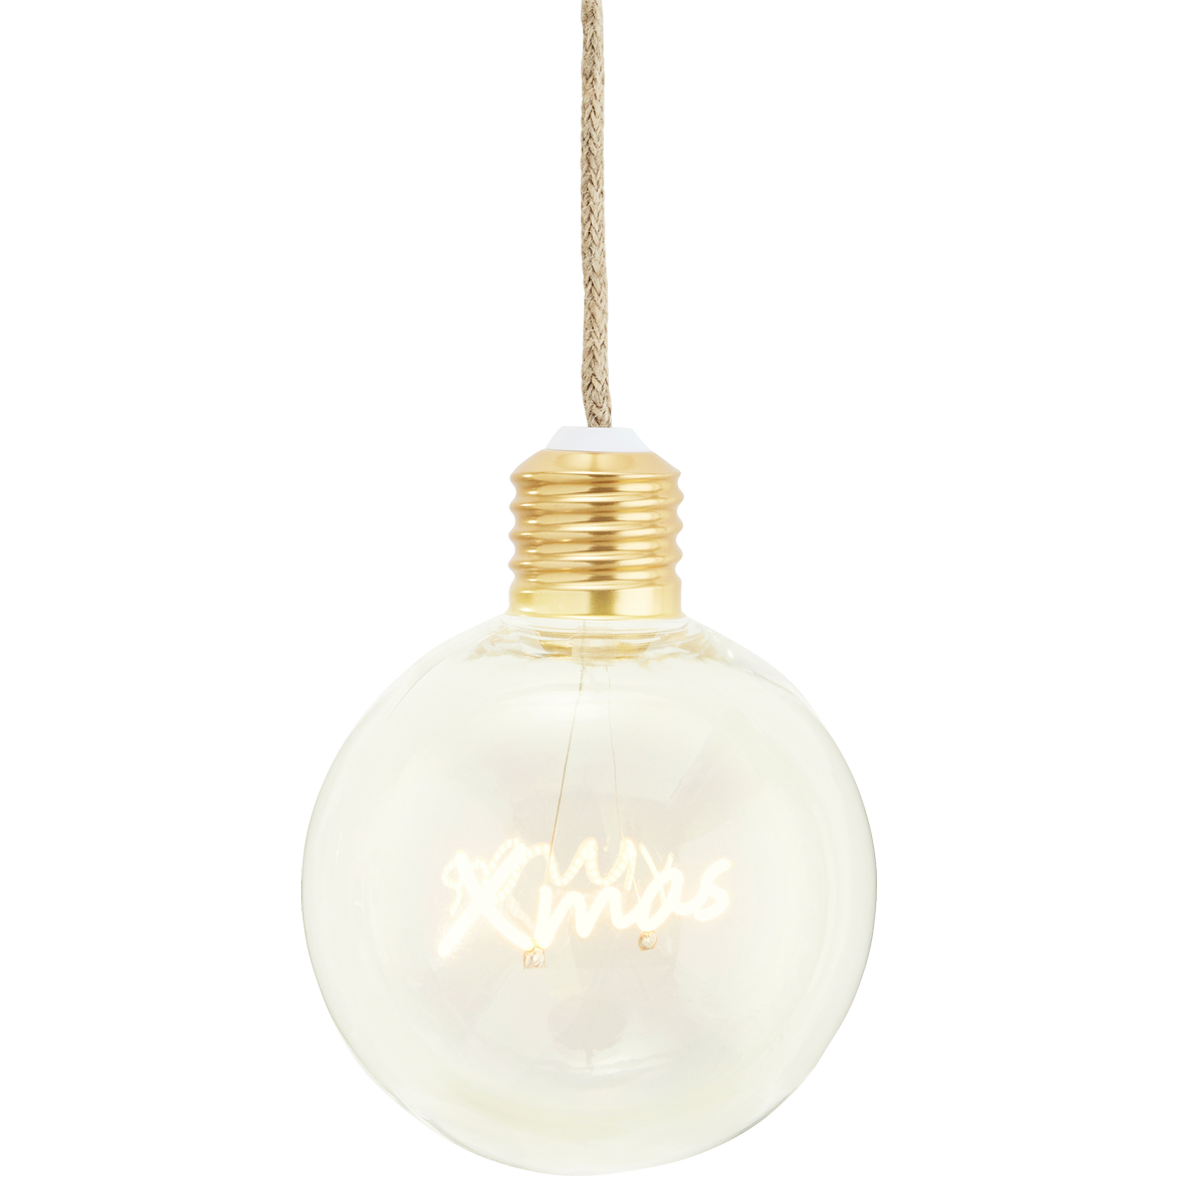 Hanging light bulb w/ filament text